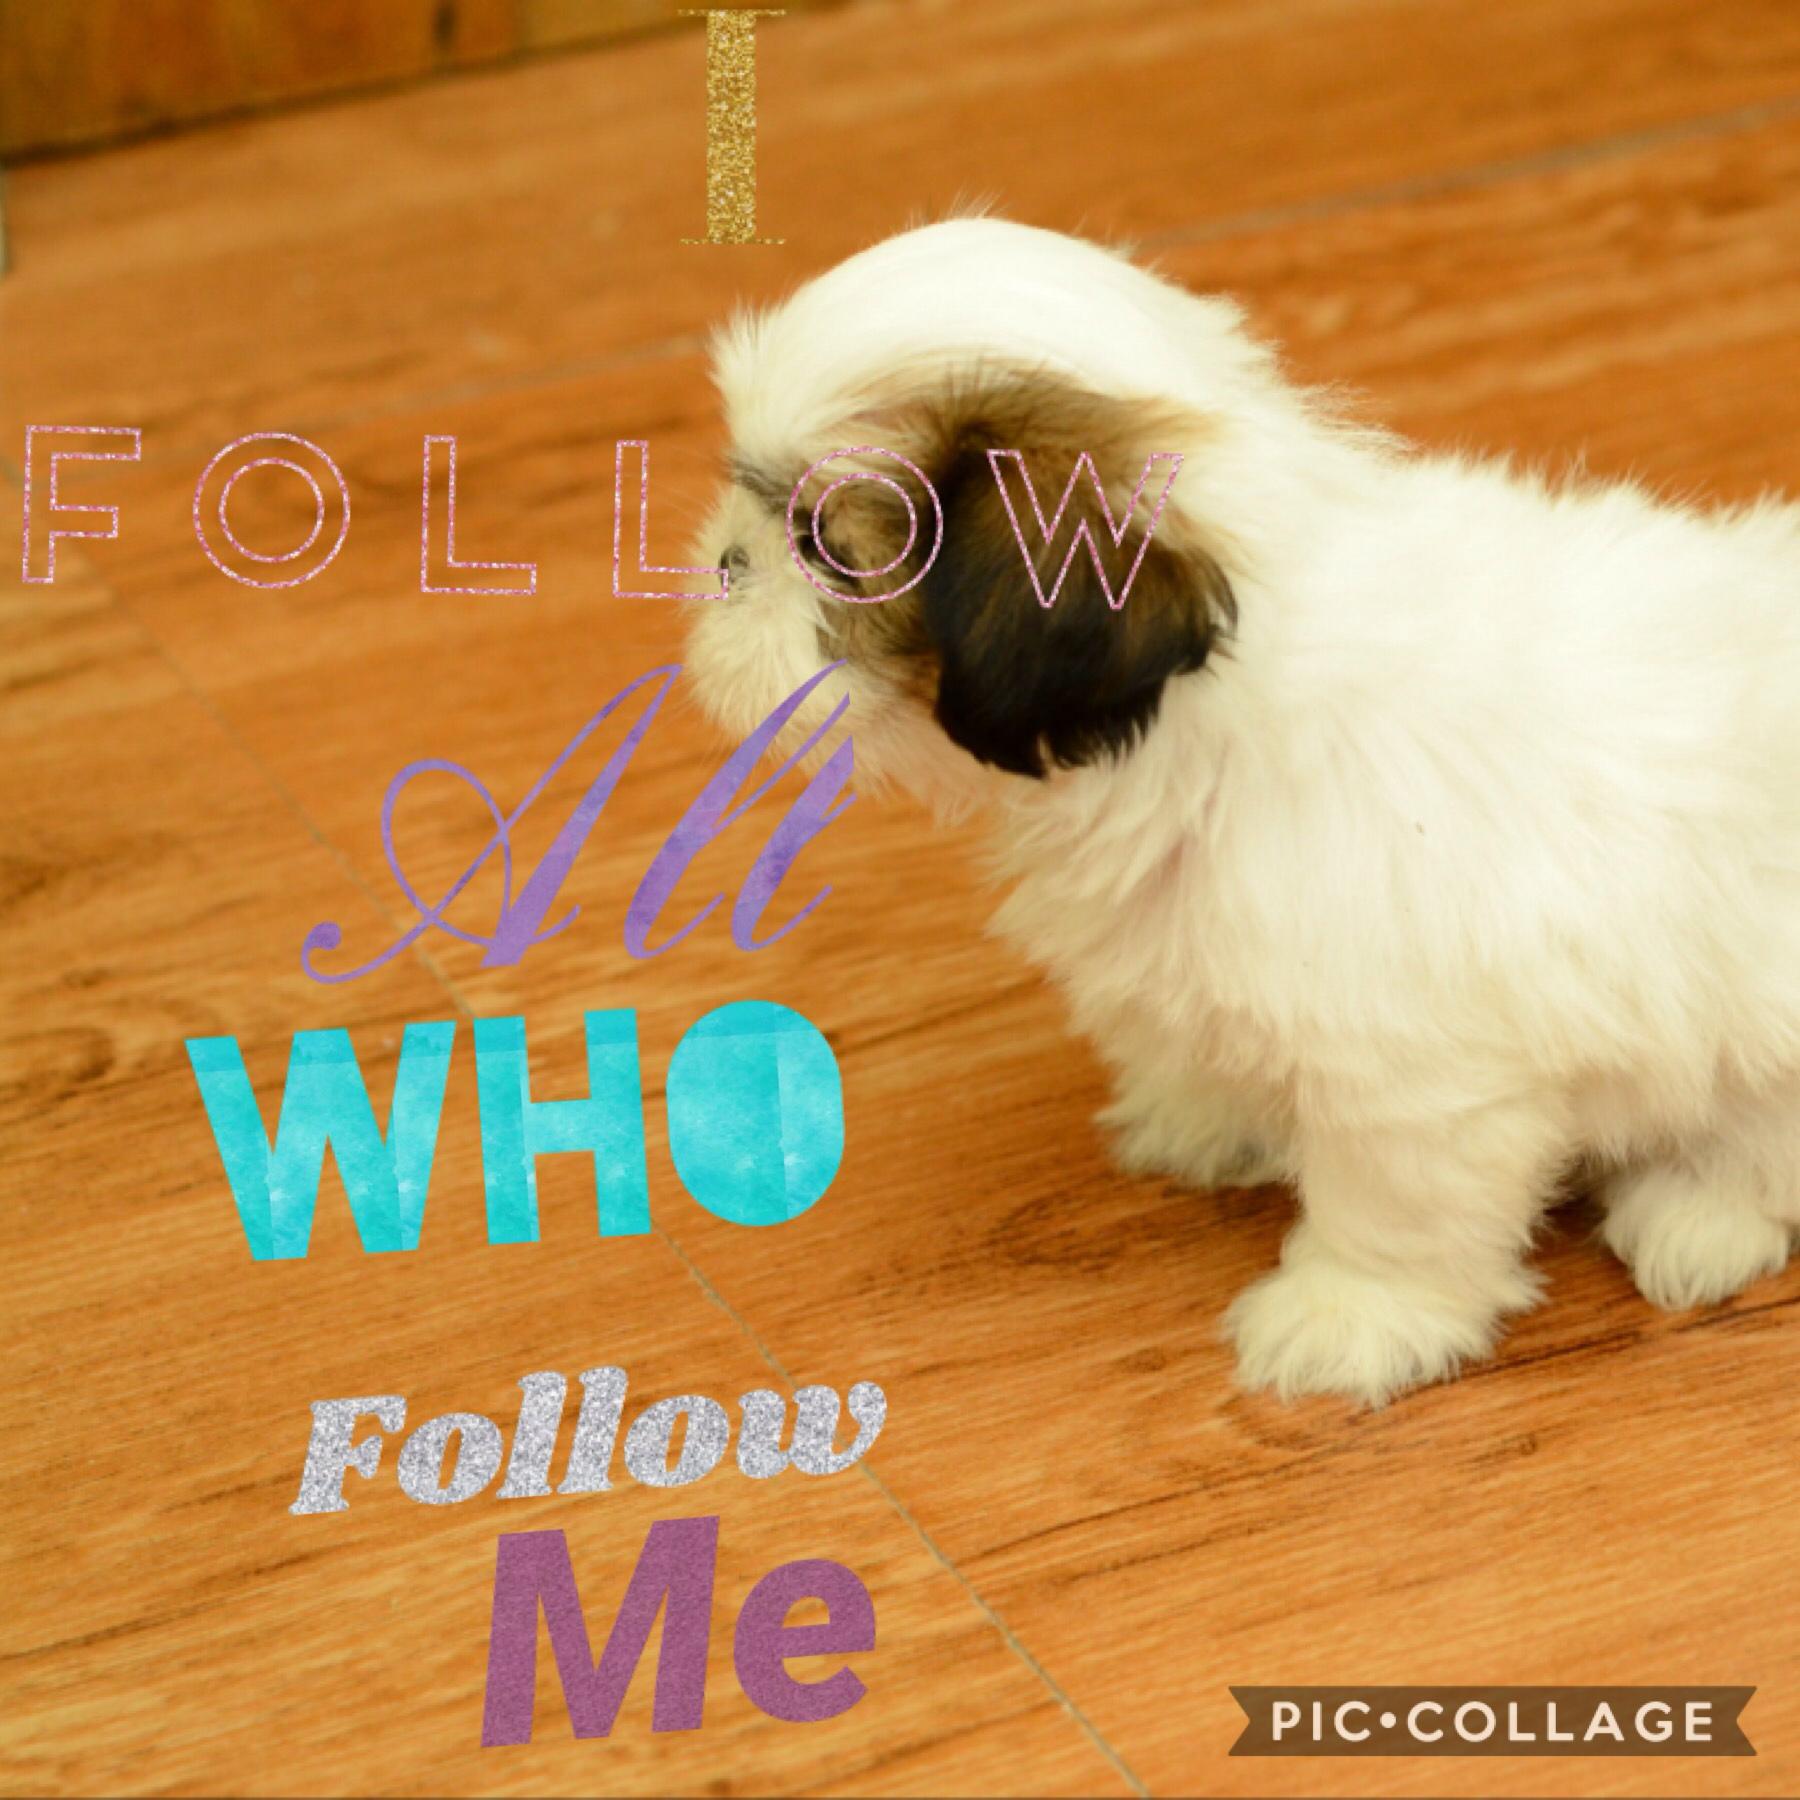 Following 